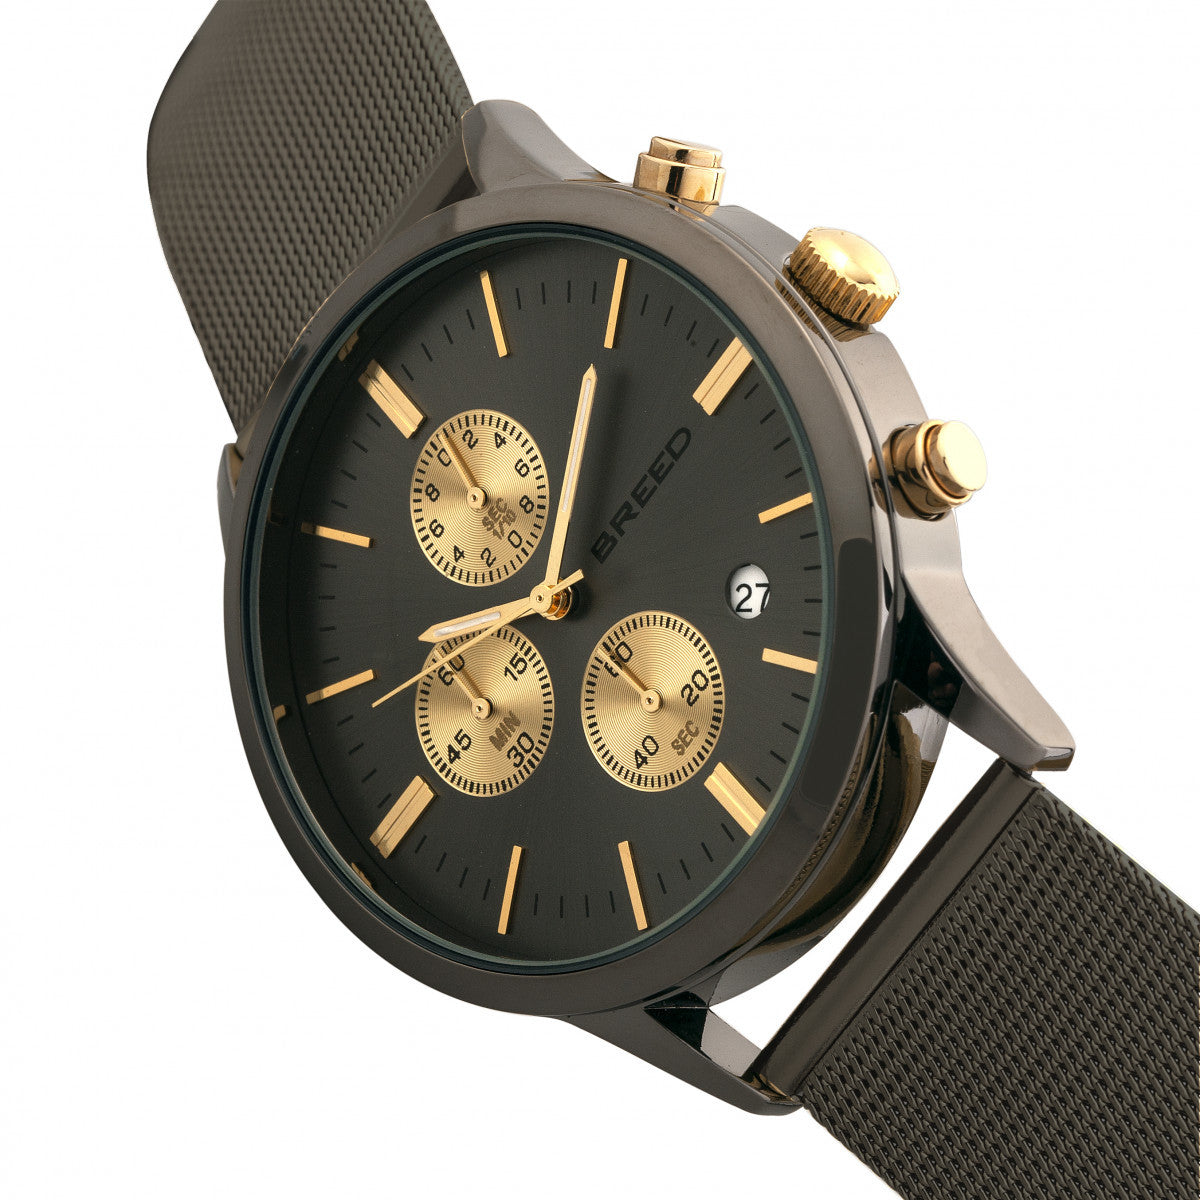 Breed Espinosa Chronograph Mesh-Bracelet Watch w/ Date - Gunmetal - BRD7604